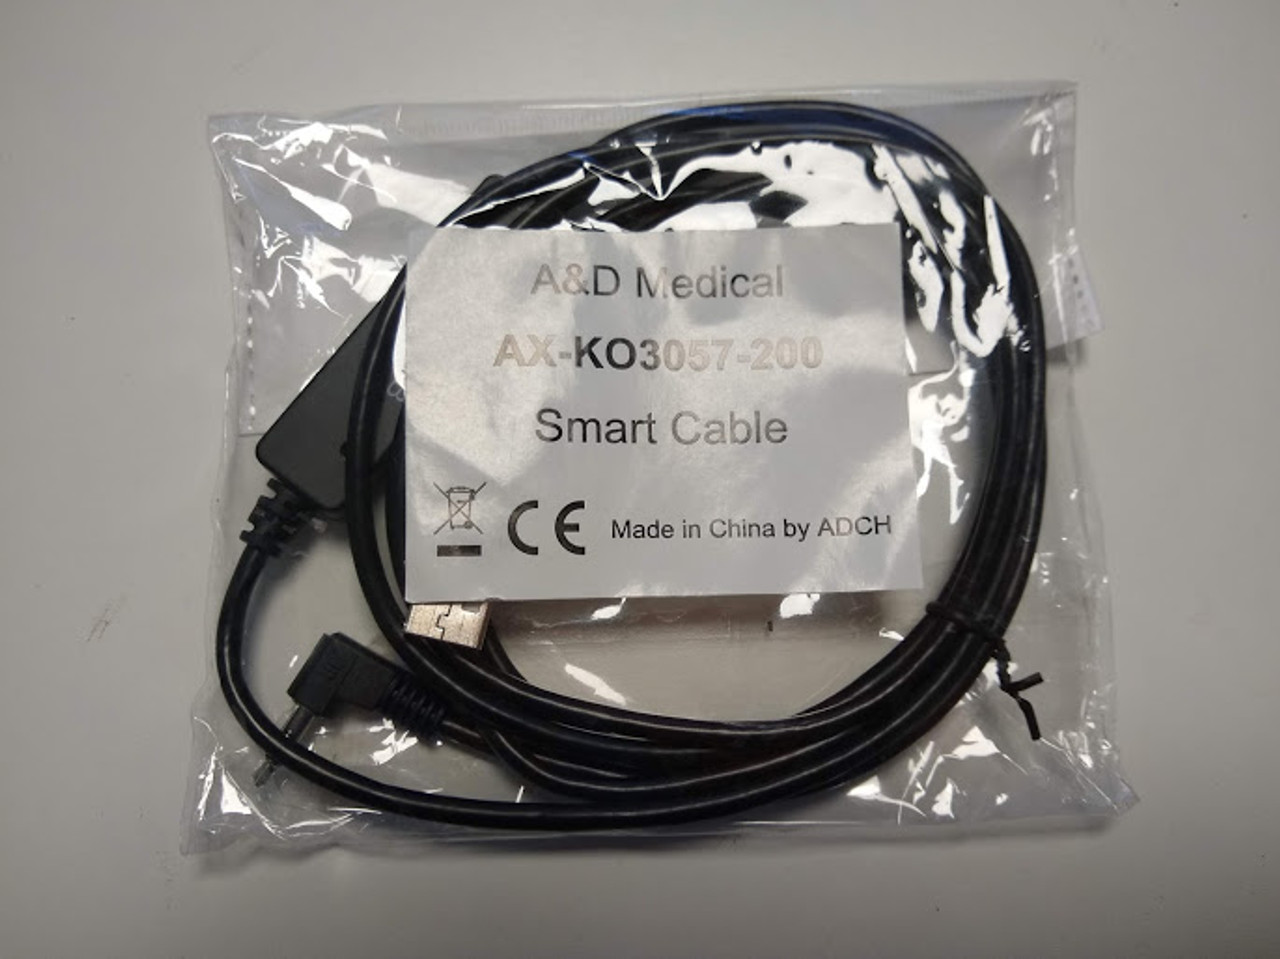 Smart Cable A&D 